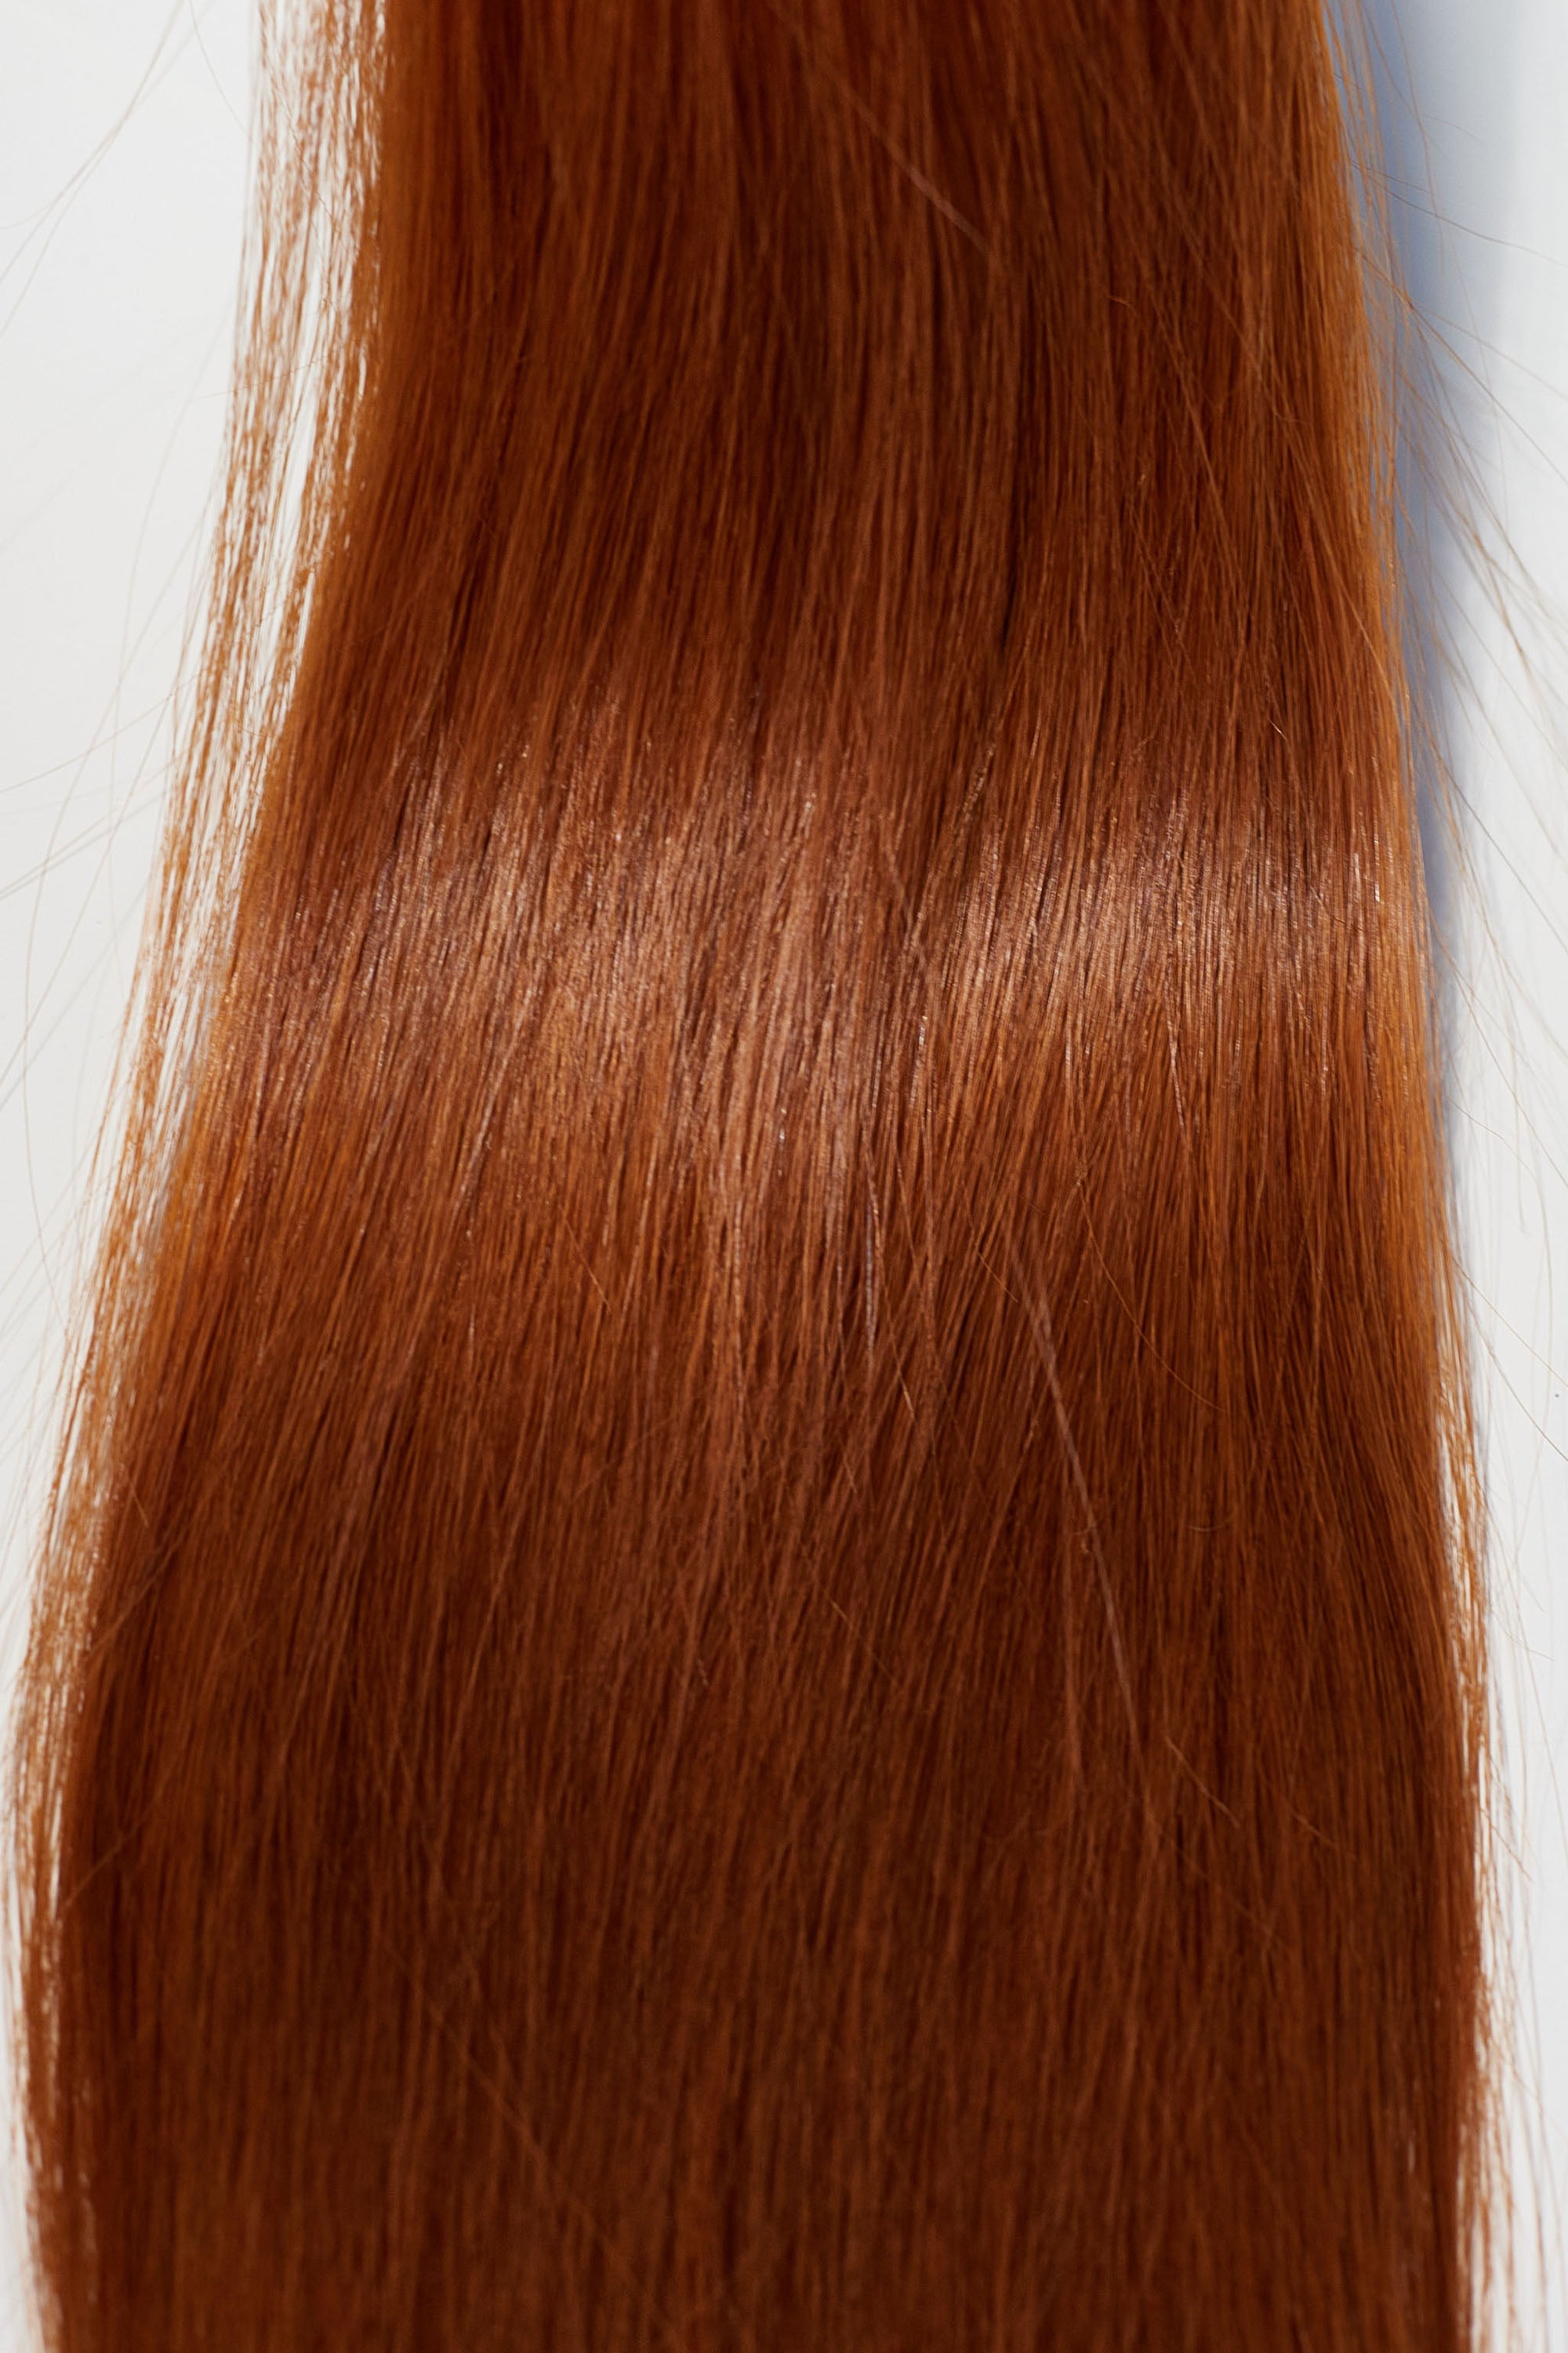 Behair professional Keratin Tip "Premium" 22" (55cm) Natural Straight Brilliant Copper #130 - 25g (Micro - 0.5g each pcs) hair extensions